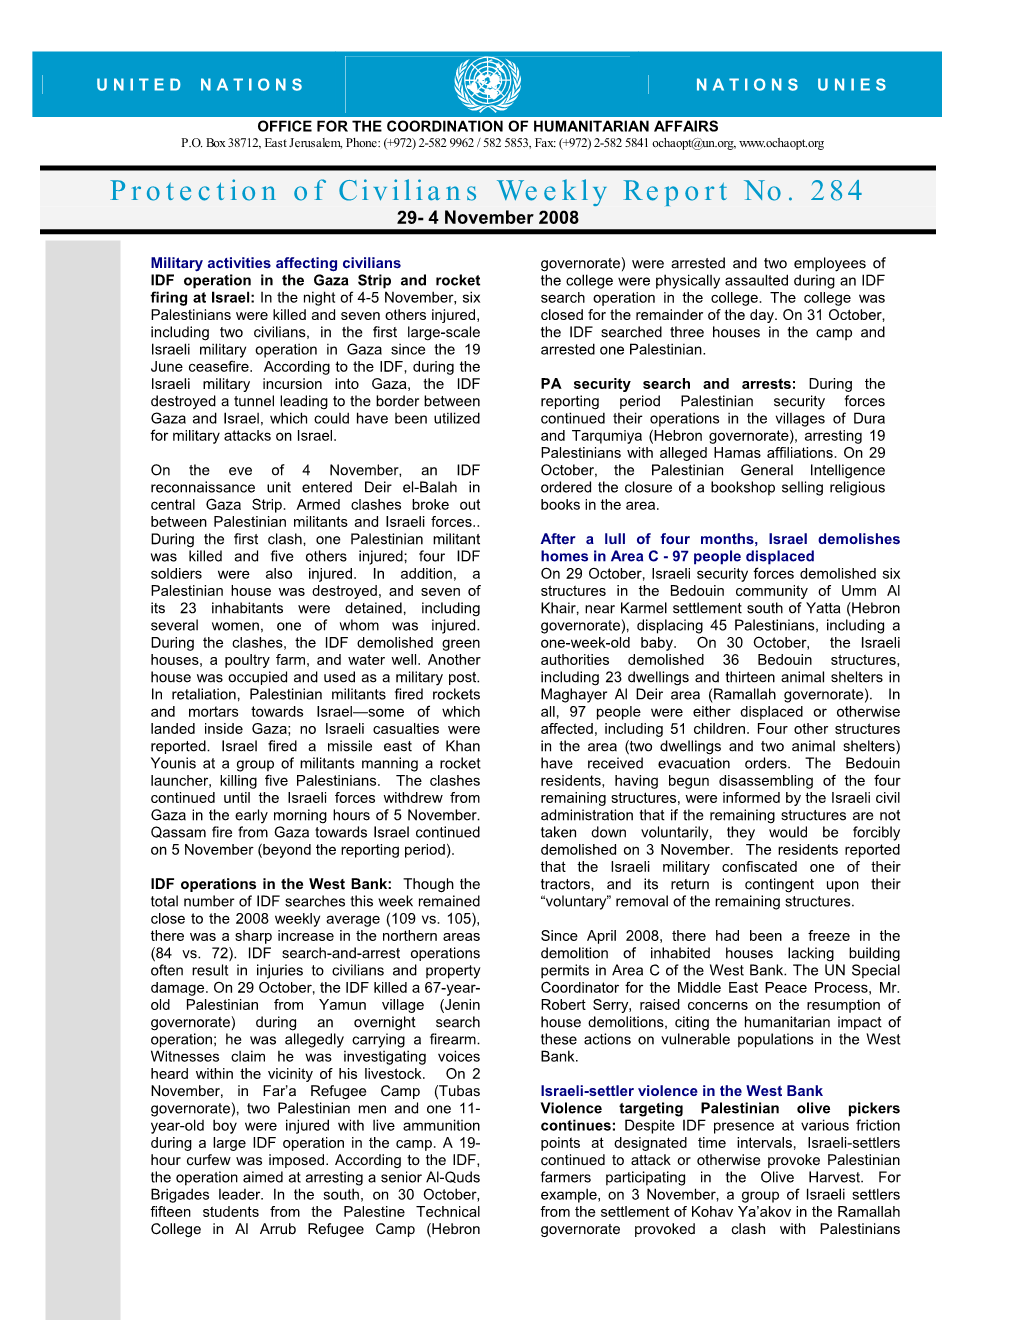 Protection of Civilians Weekly Report No. 284 29- 4 November 2008